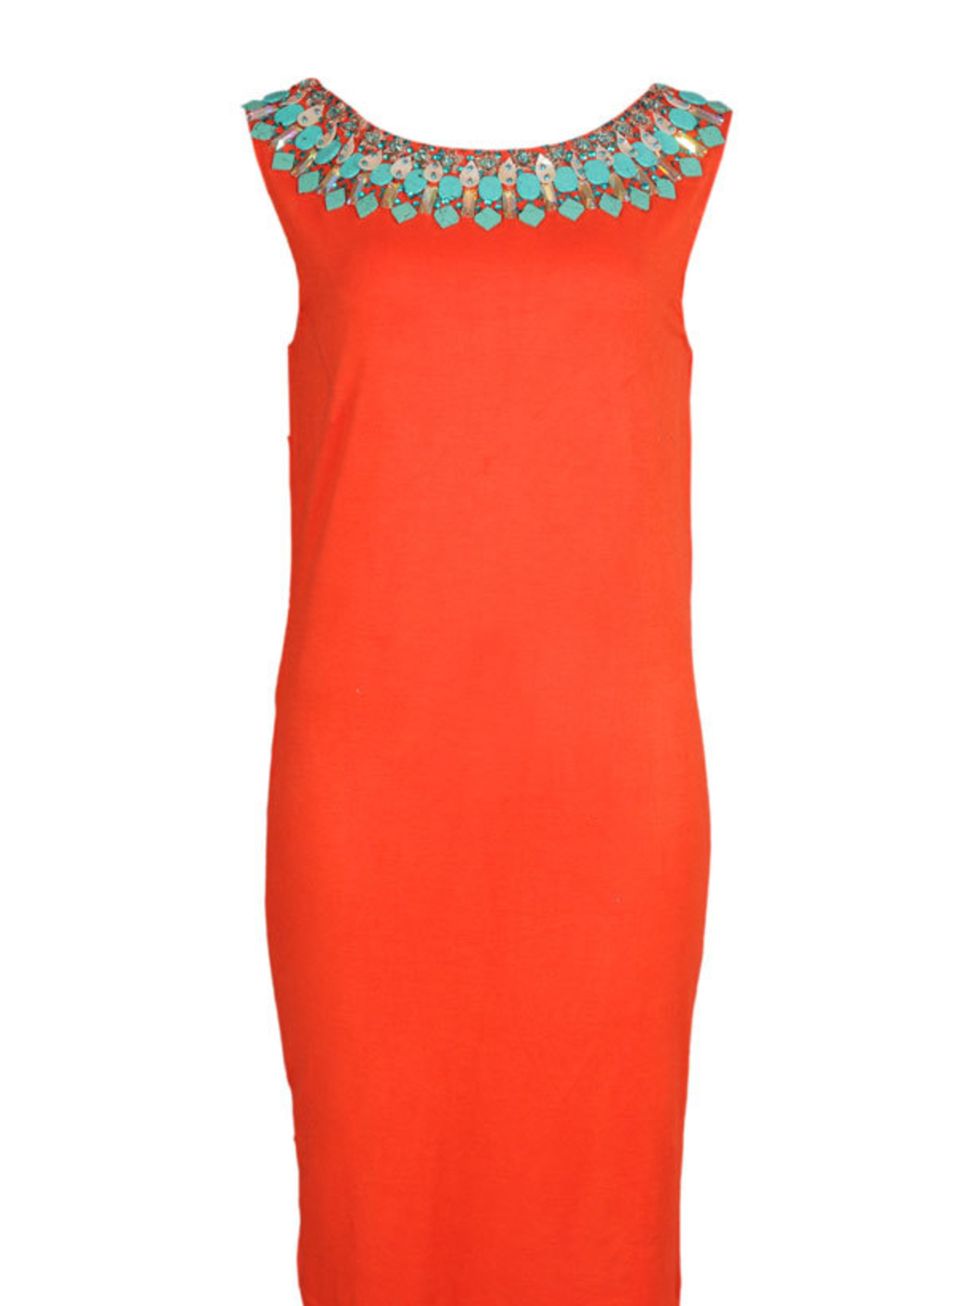 <p>Beaded Grecian dress, £210, by <a href="http://www.chicaboutiqueonline.com/p-896-alba-dress-orange.aspx">Chica Boutique </a></p>